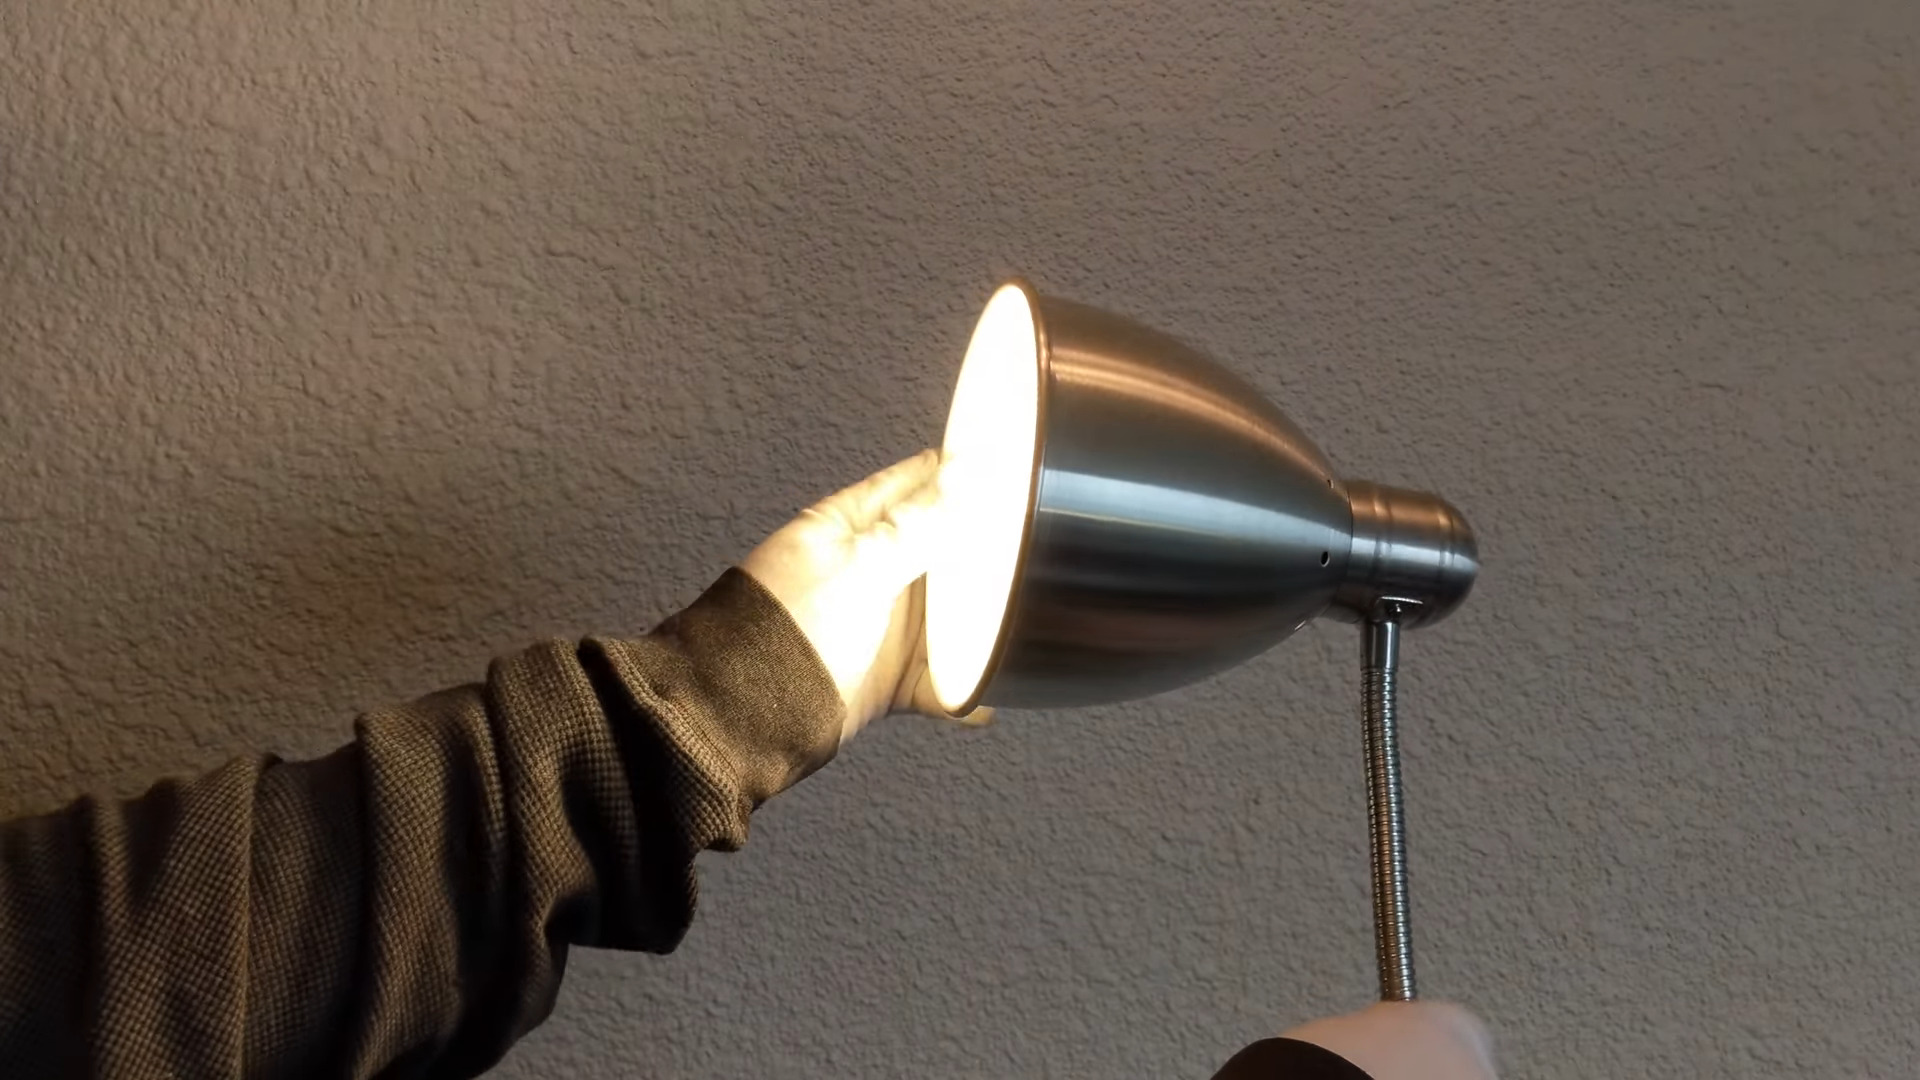  Lersta lamp assembly 